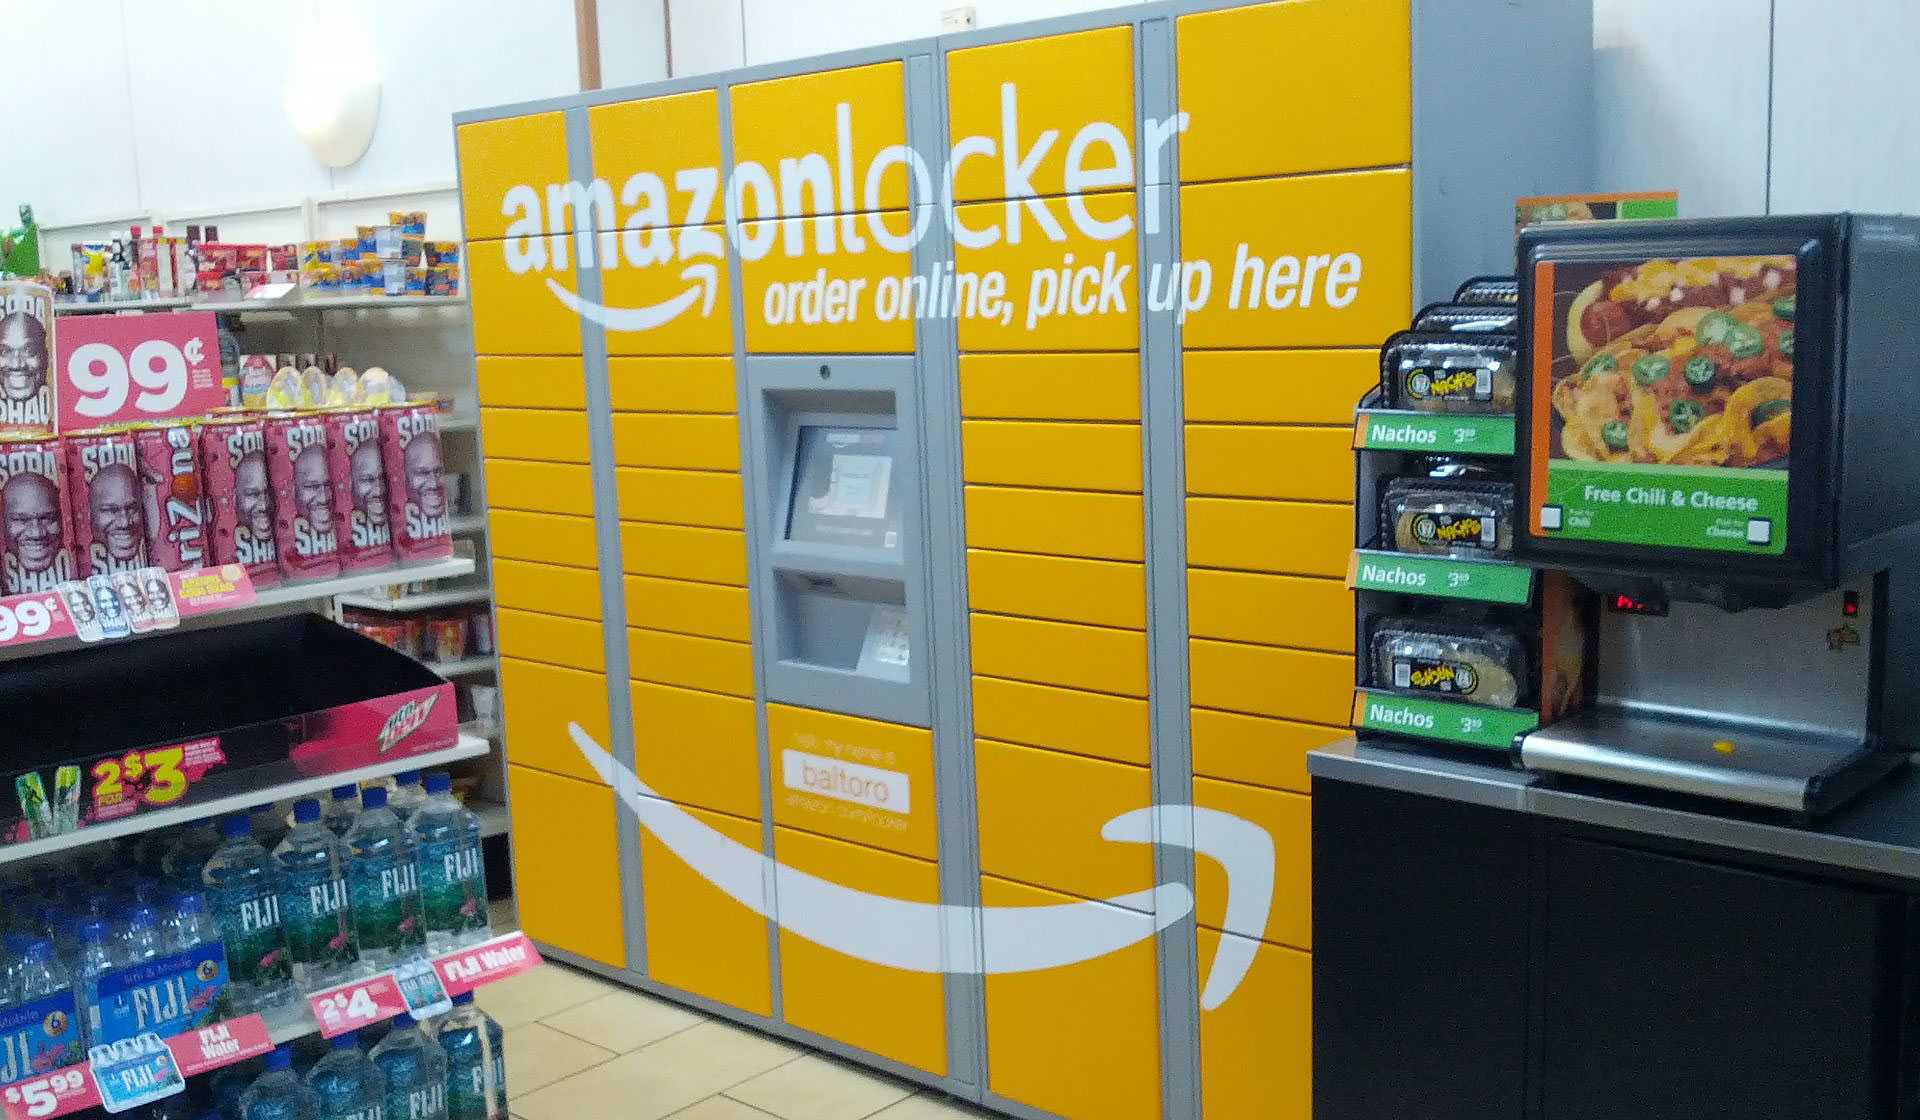 Frankrike nästa land för Amazons paketautomater